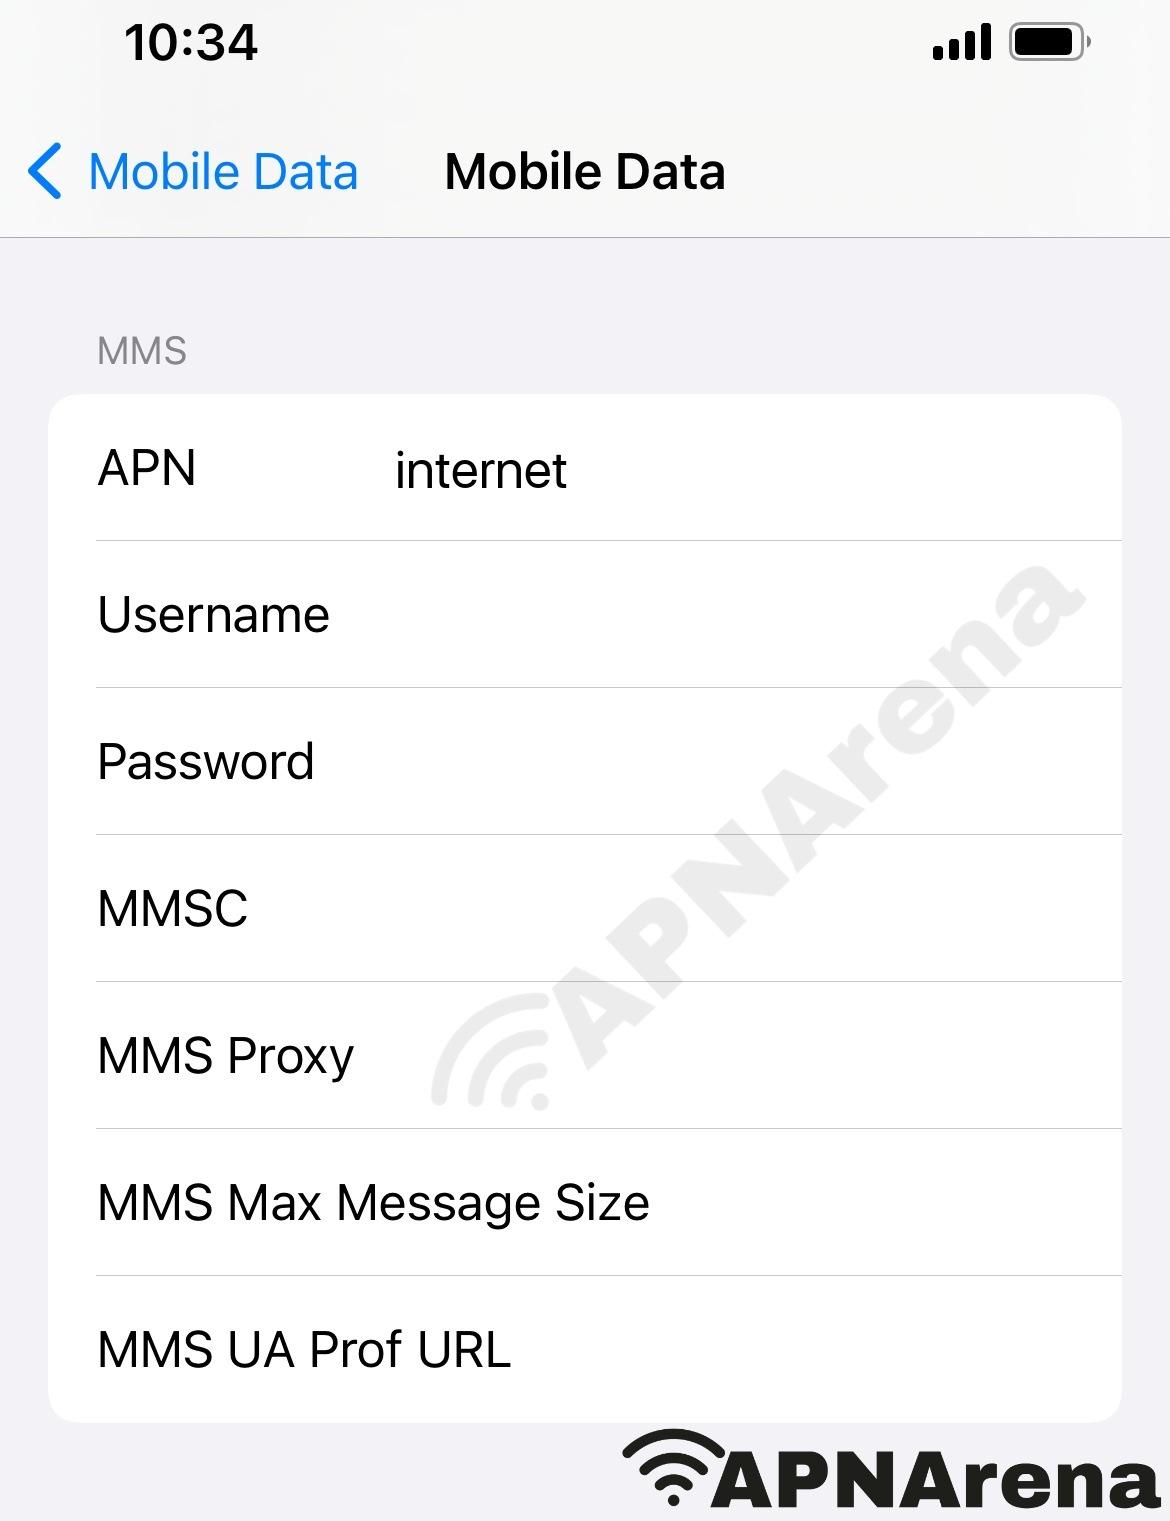 RedBull Mobile Oman MMS Settings for iPhone